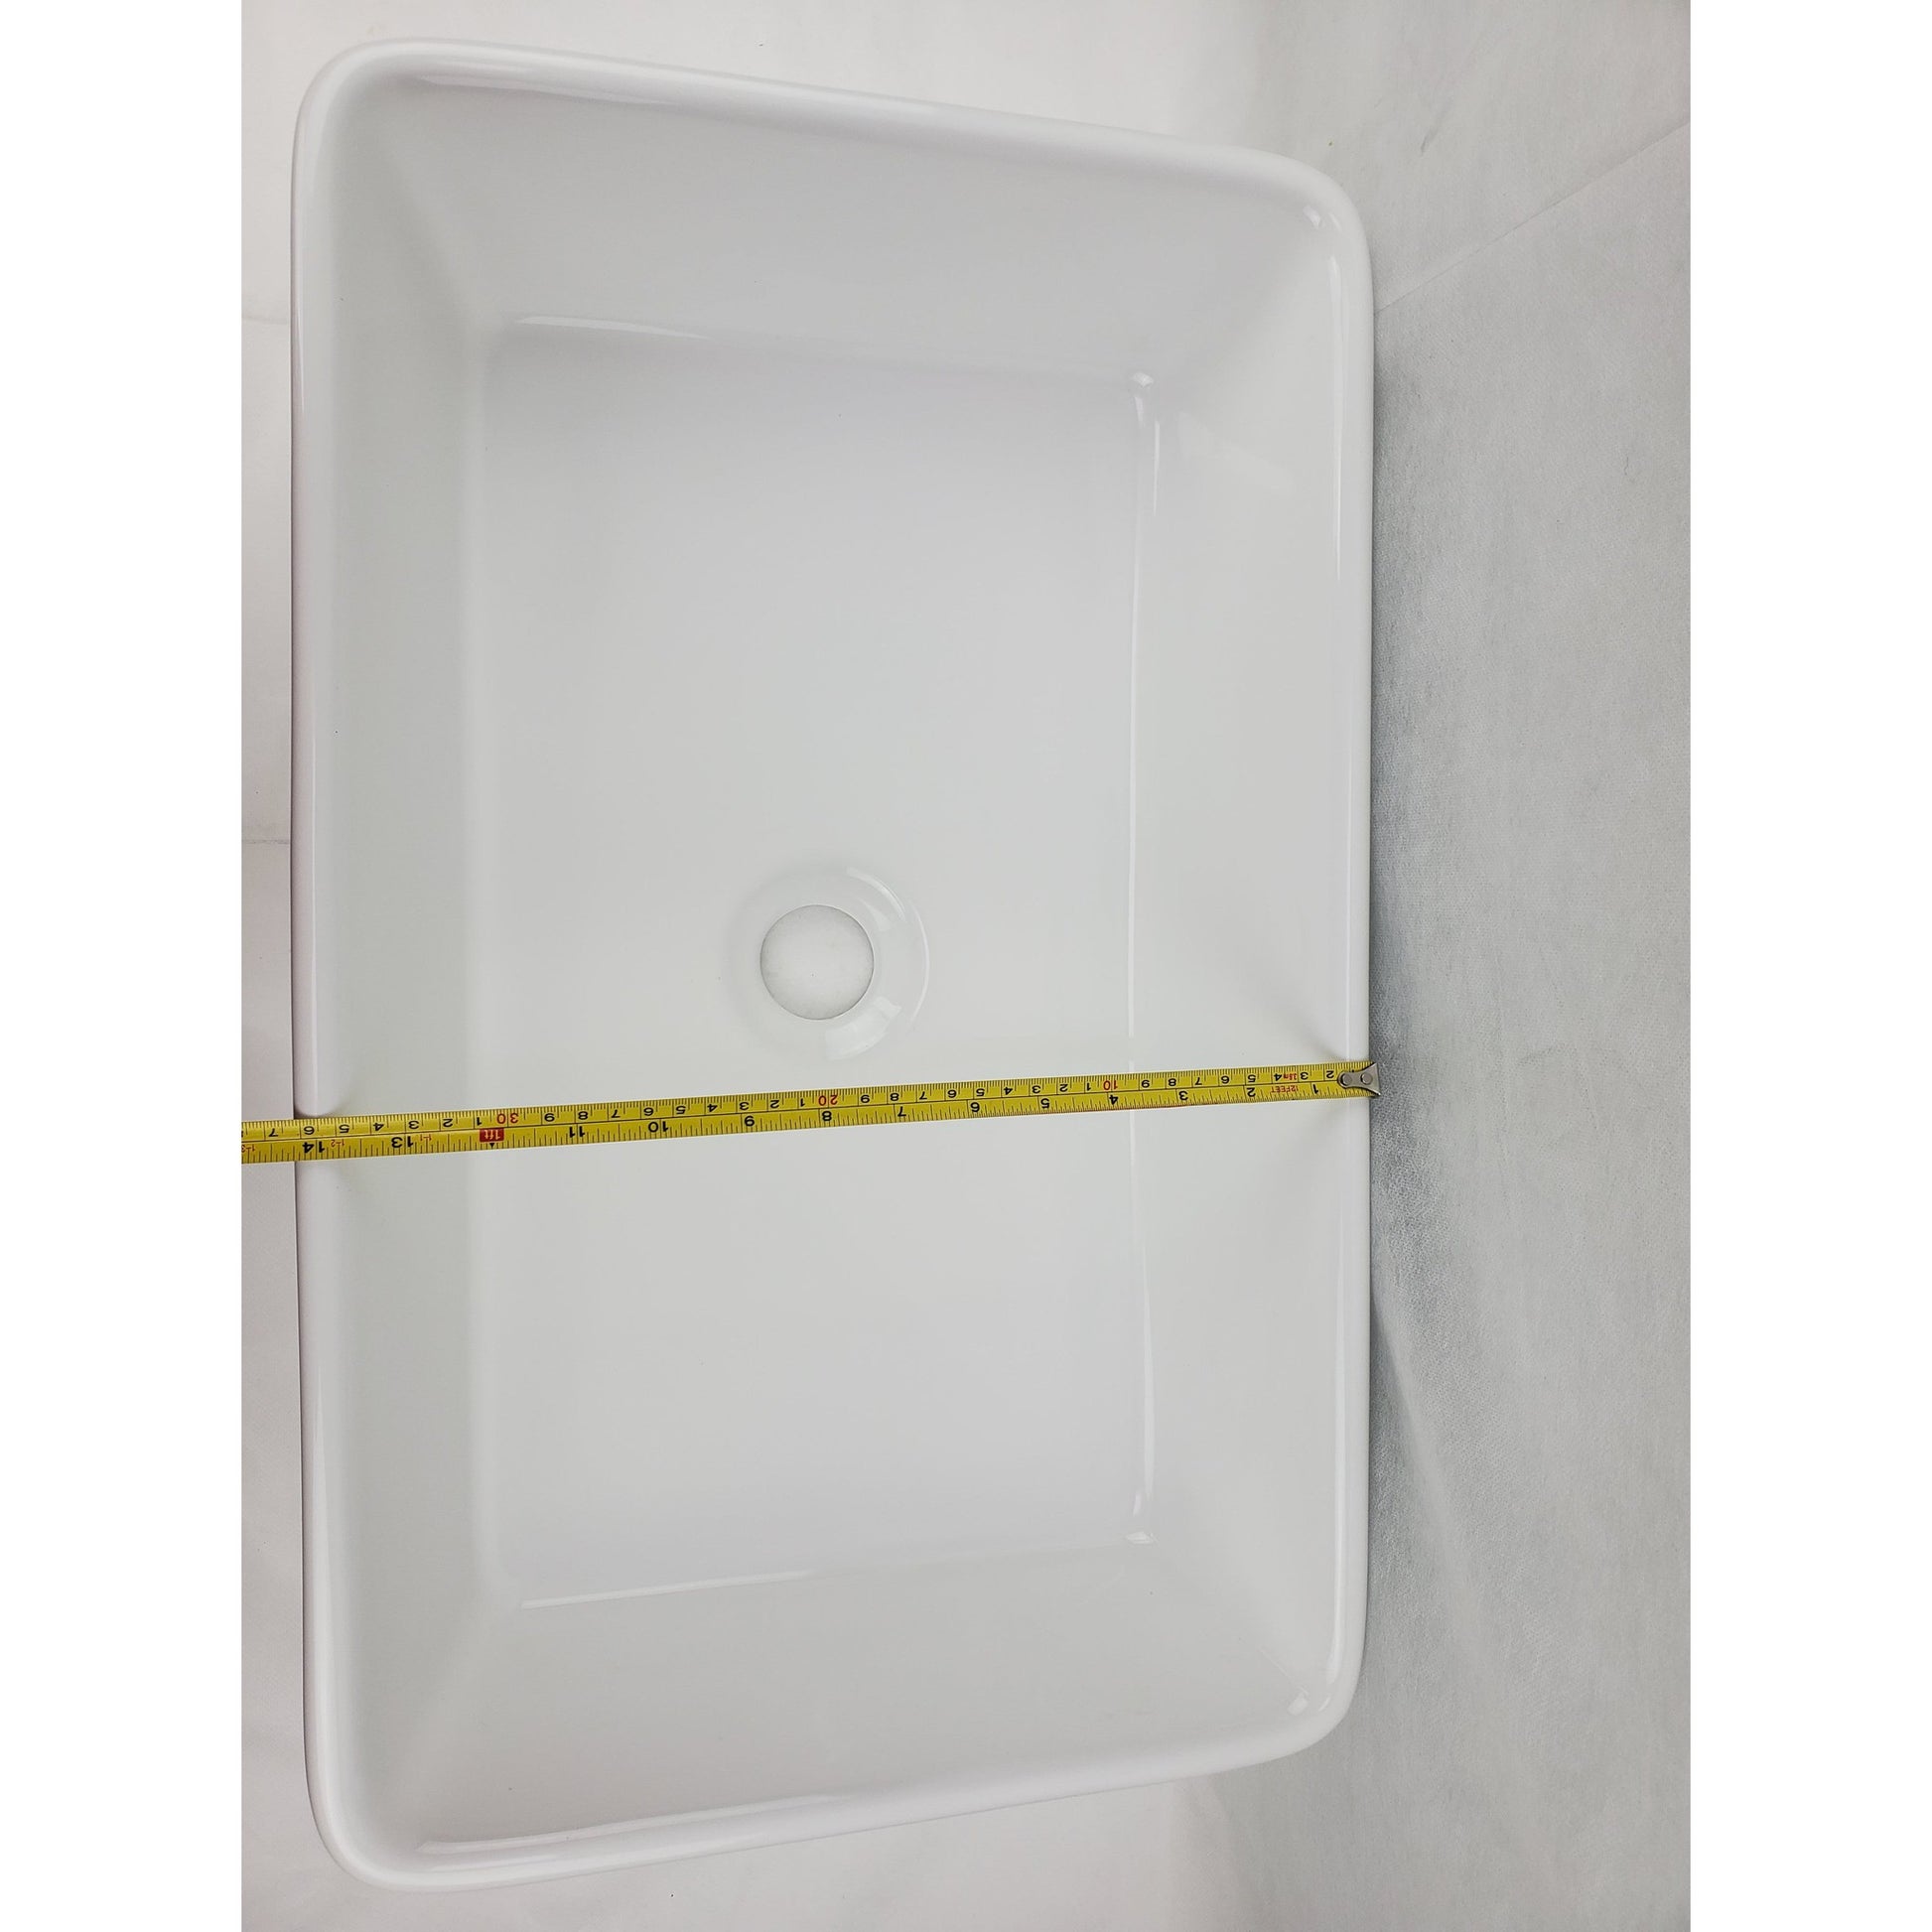 American Imaginations AI-28206 Rectangle White Ceramic Bathroom Vessel Sink with Enamel Glaze Finish